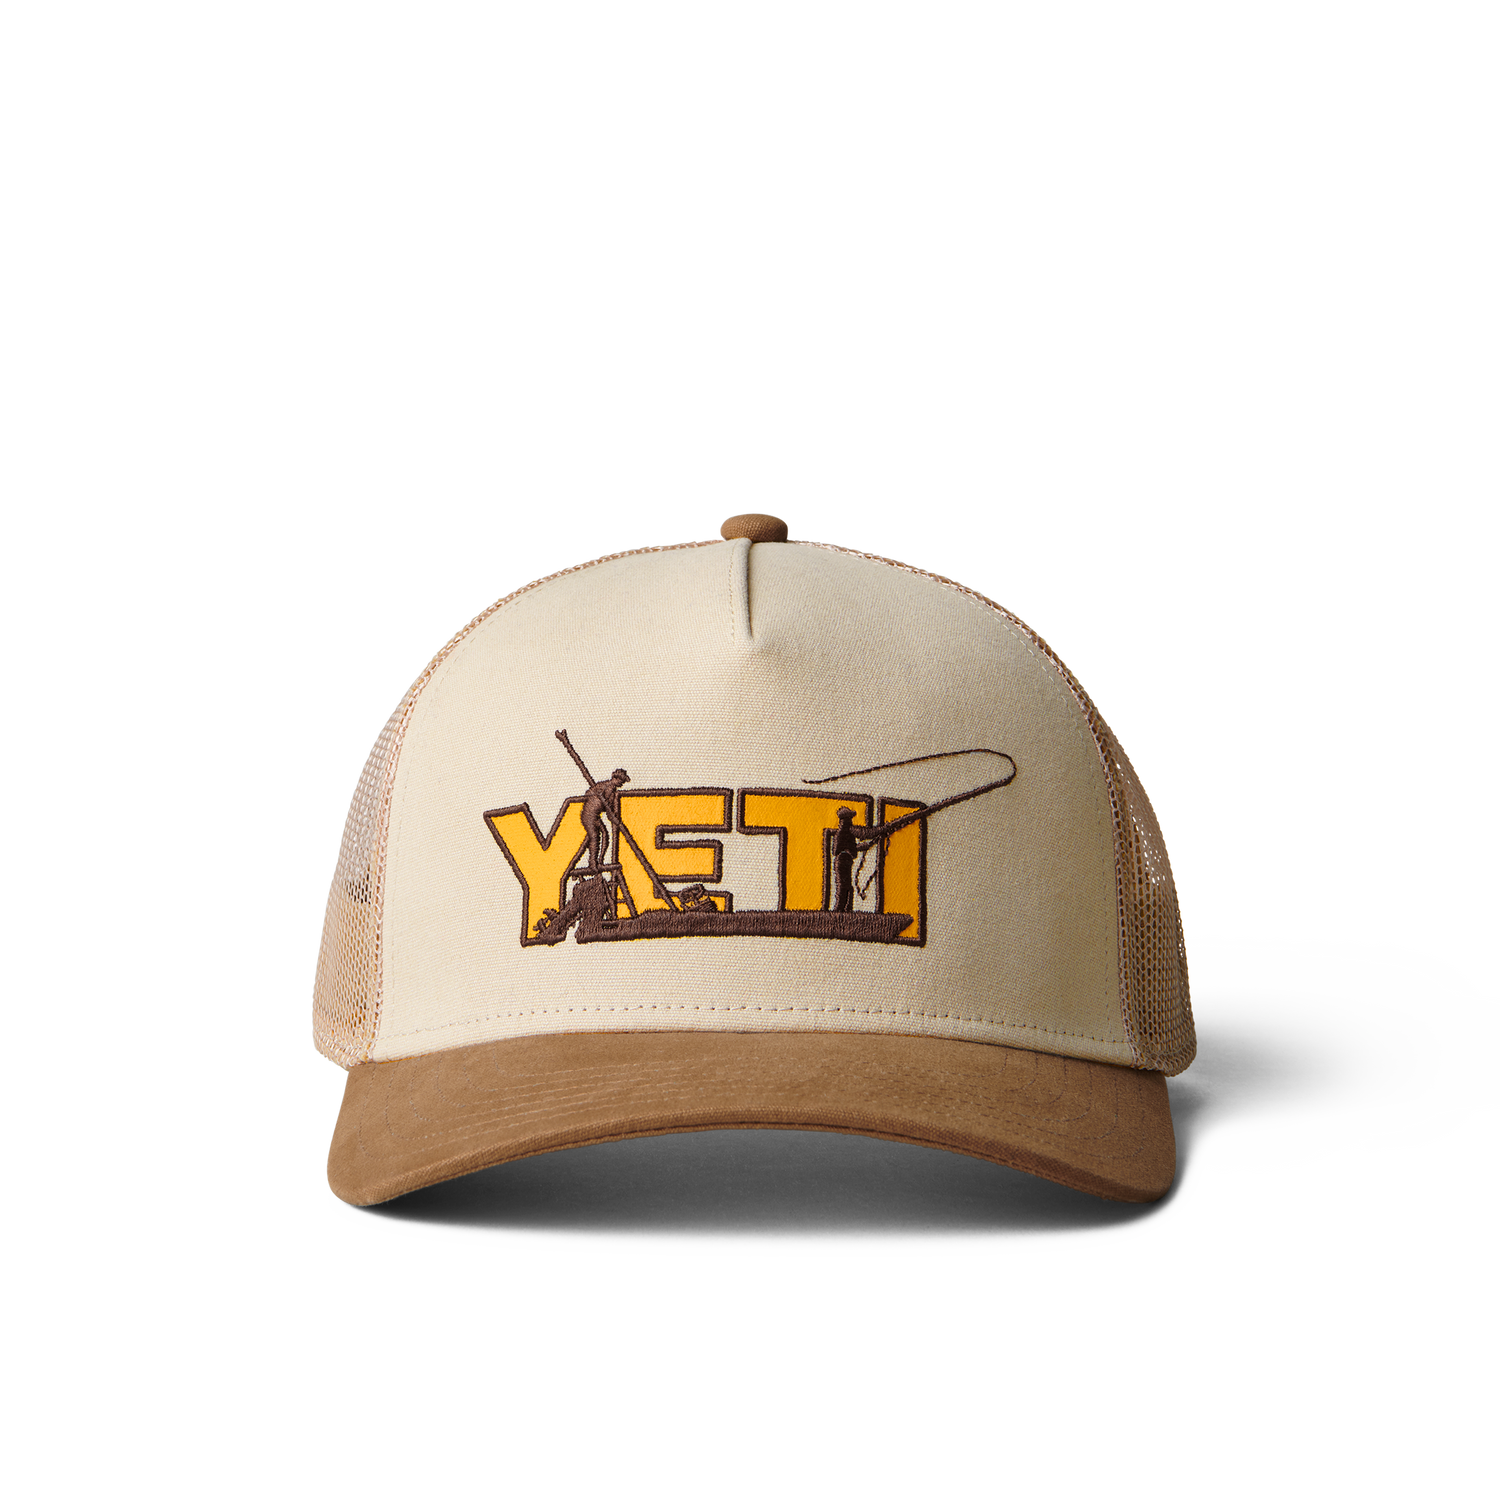 Buy Collection Yeti Hats - Yeti Factory Store Wholesale